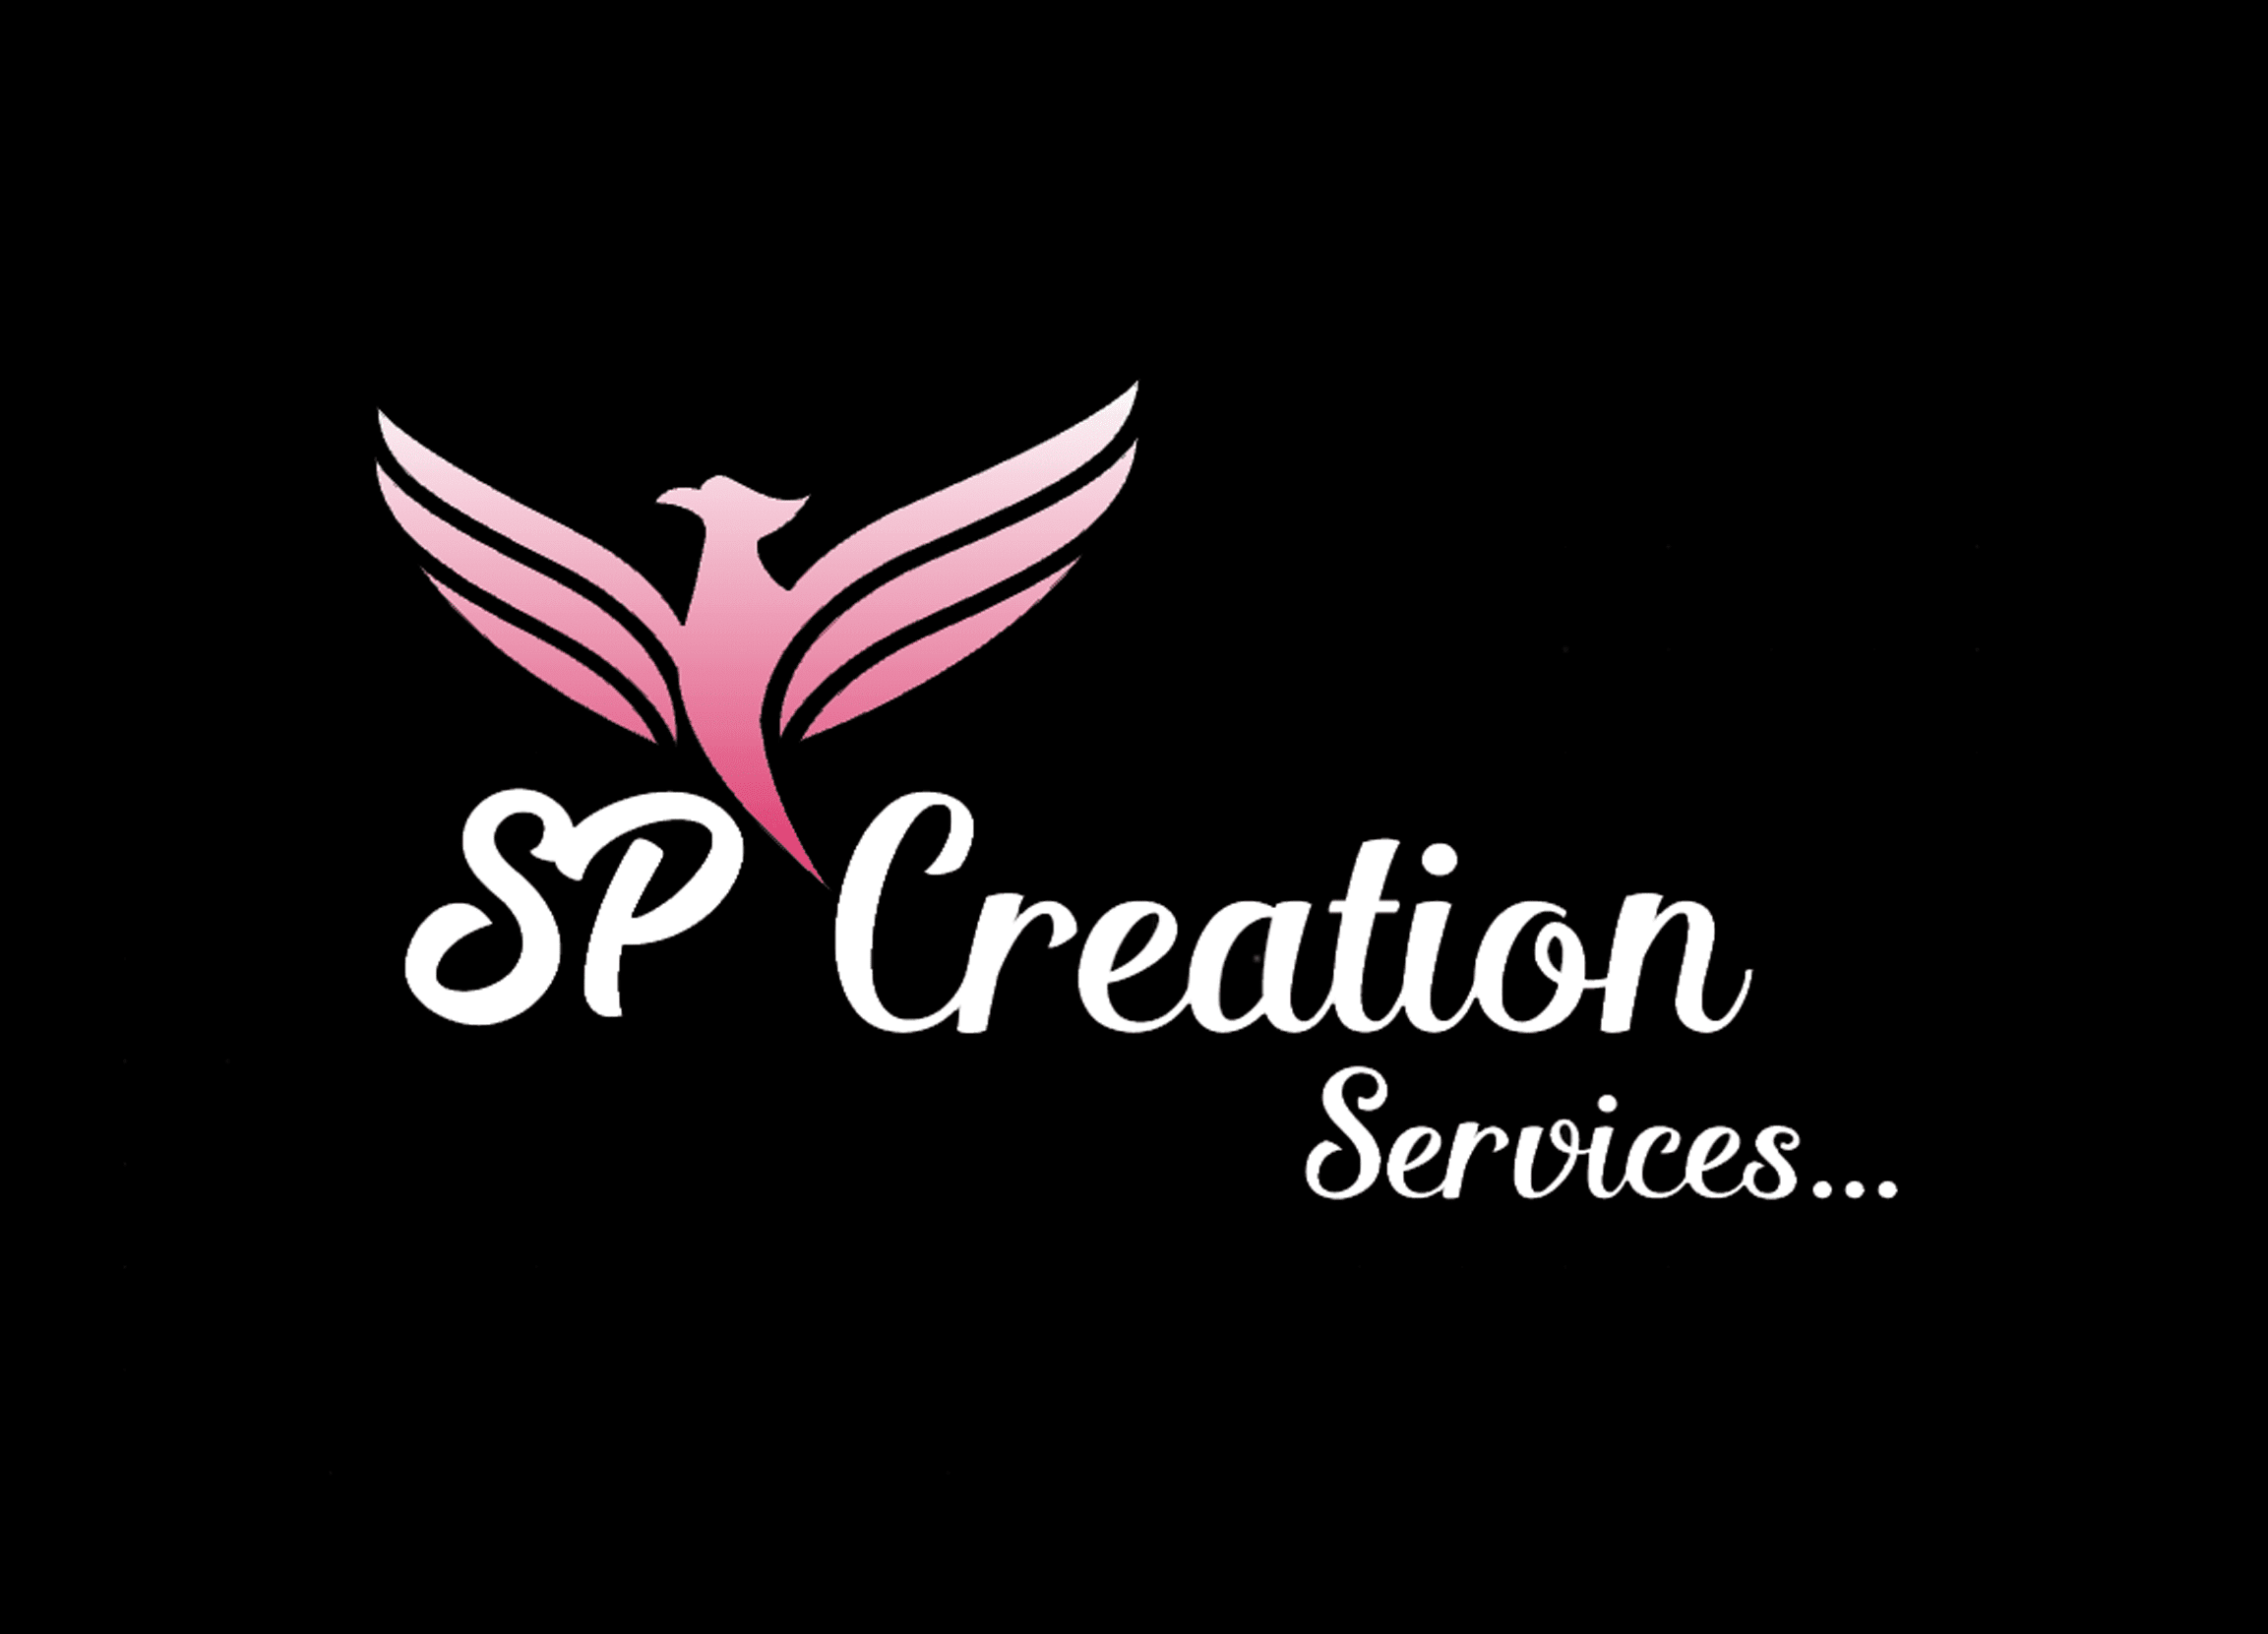 SP Creation Services